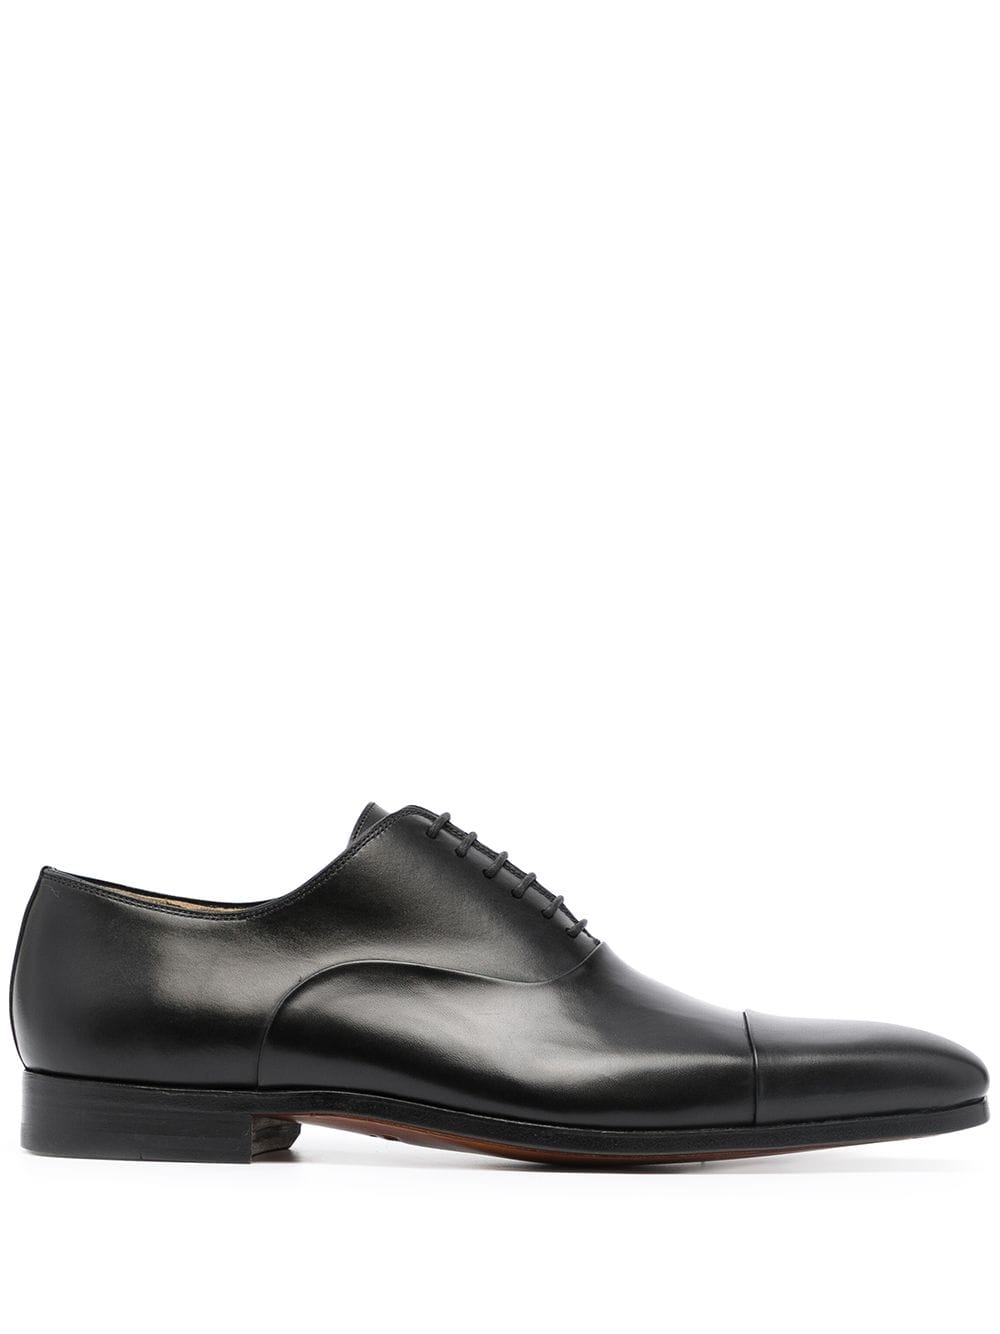 Magnanni Negro leather Oxford shoes - Black von Magnanni